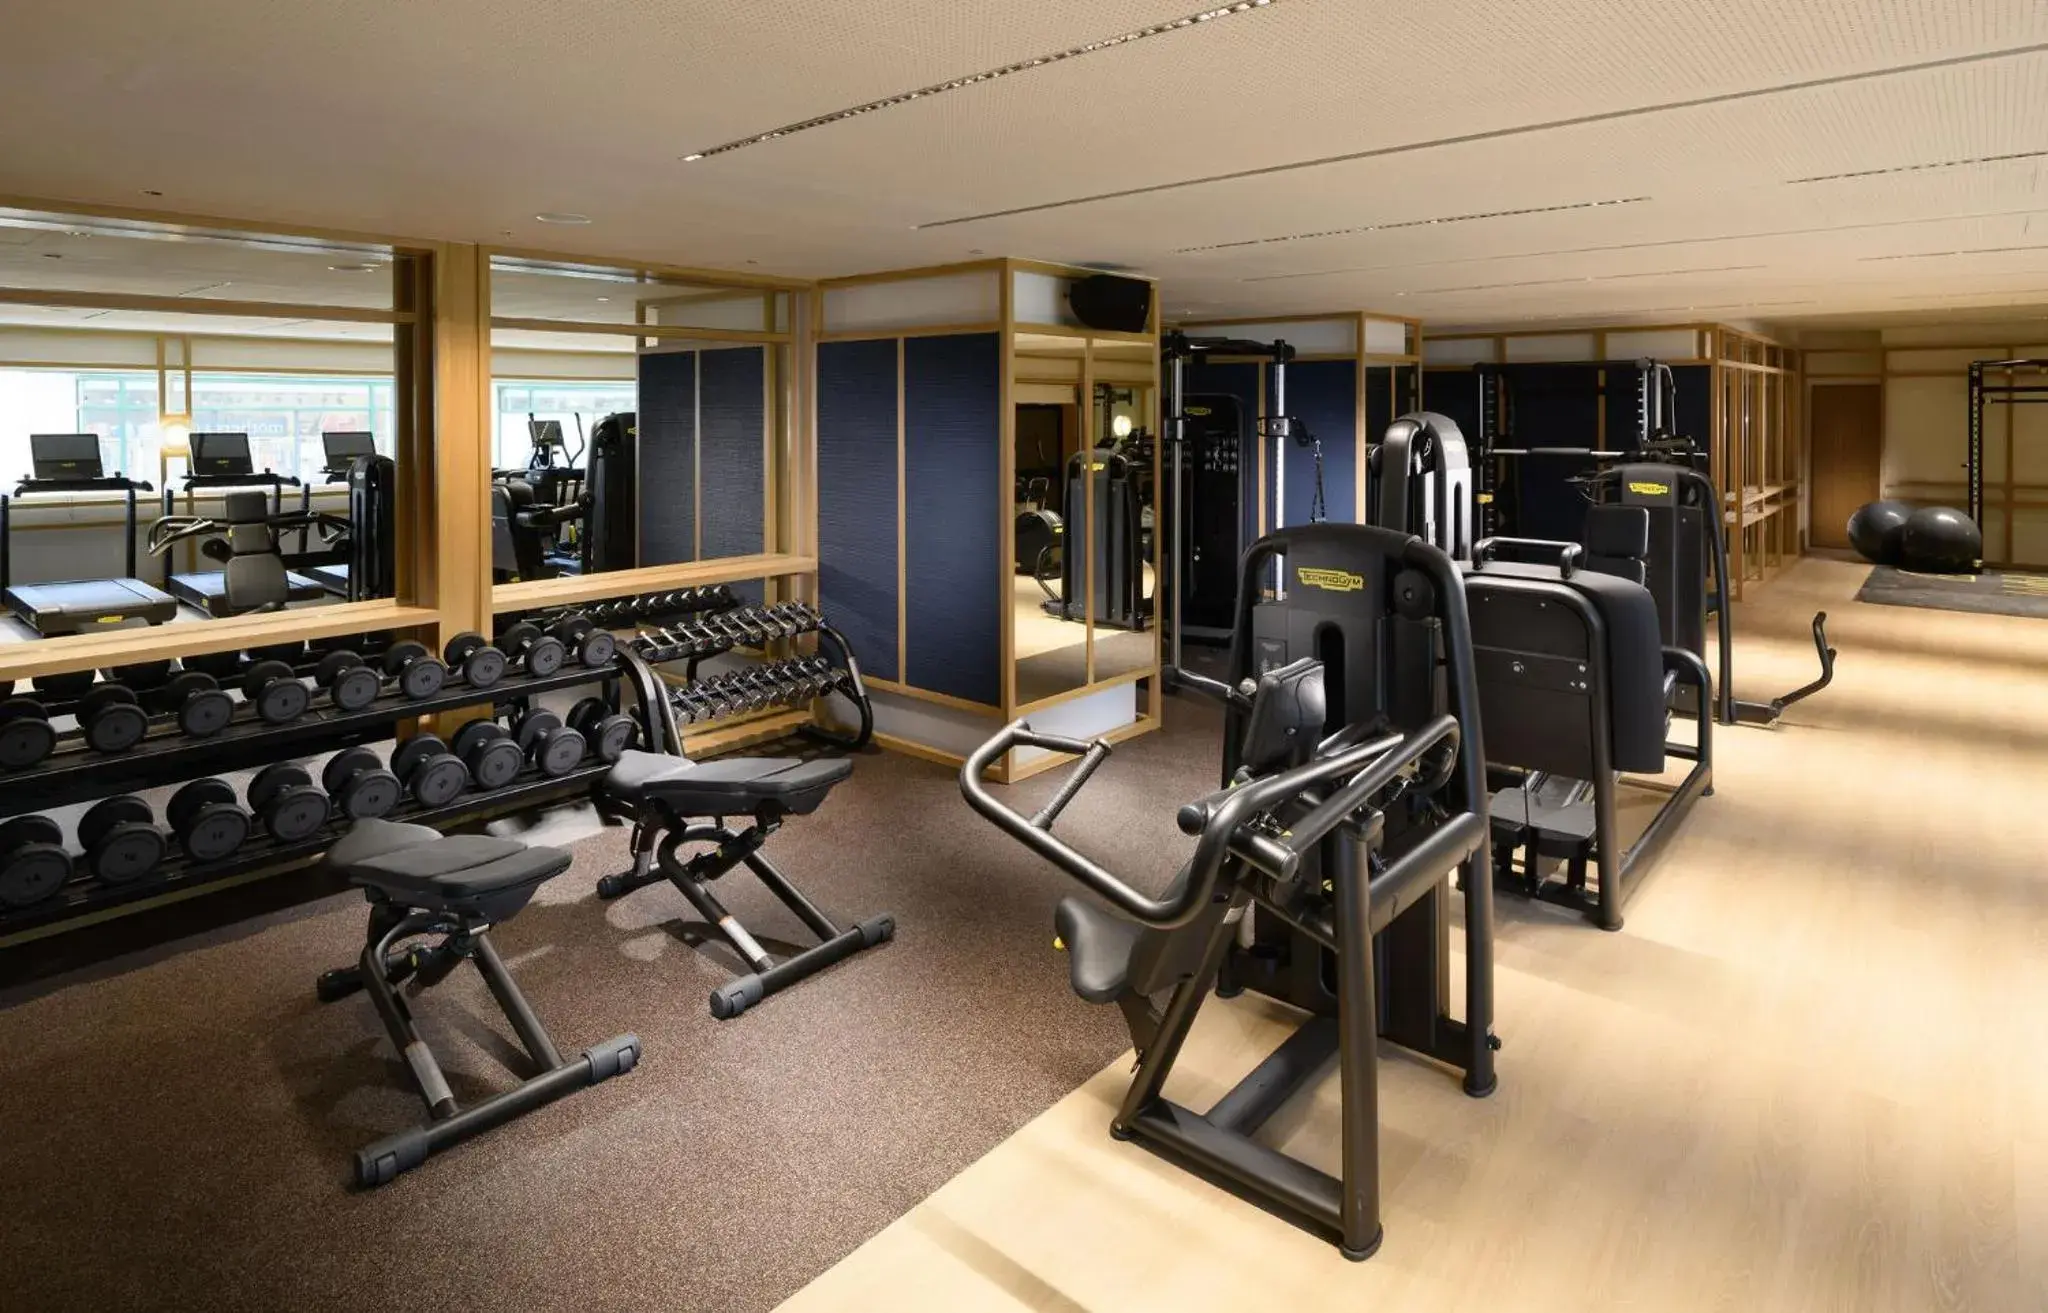 Fitness centre/facilities, Fitness Center/Facilities in Conrad Singapore Orchard